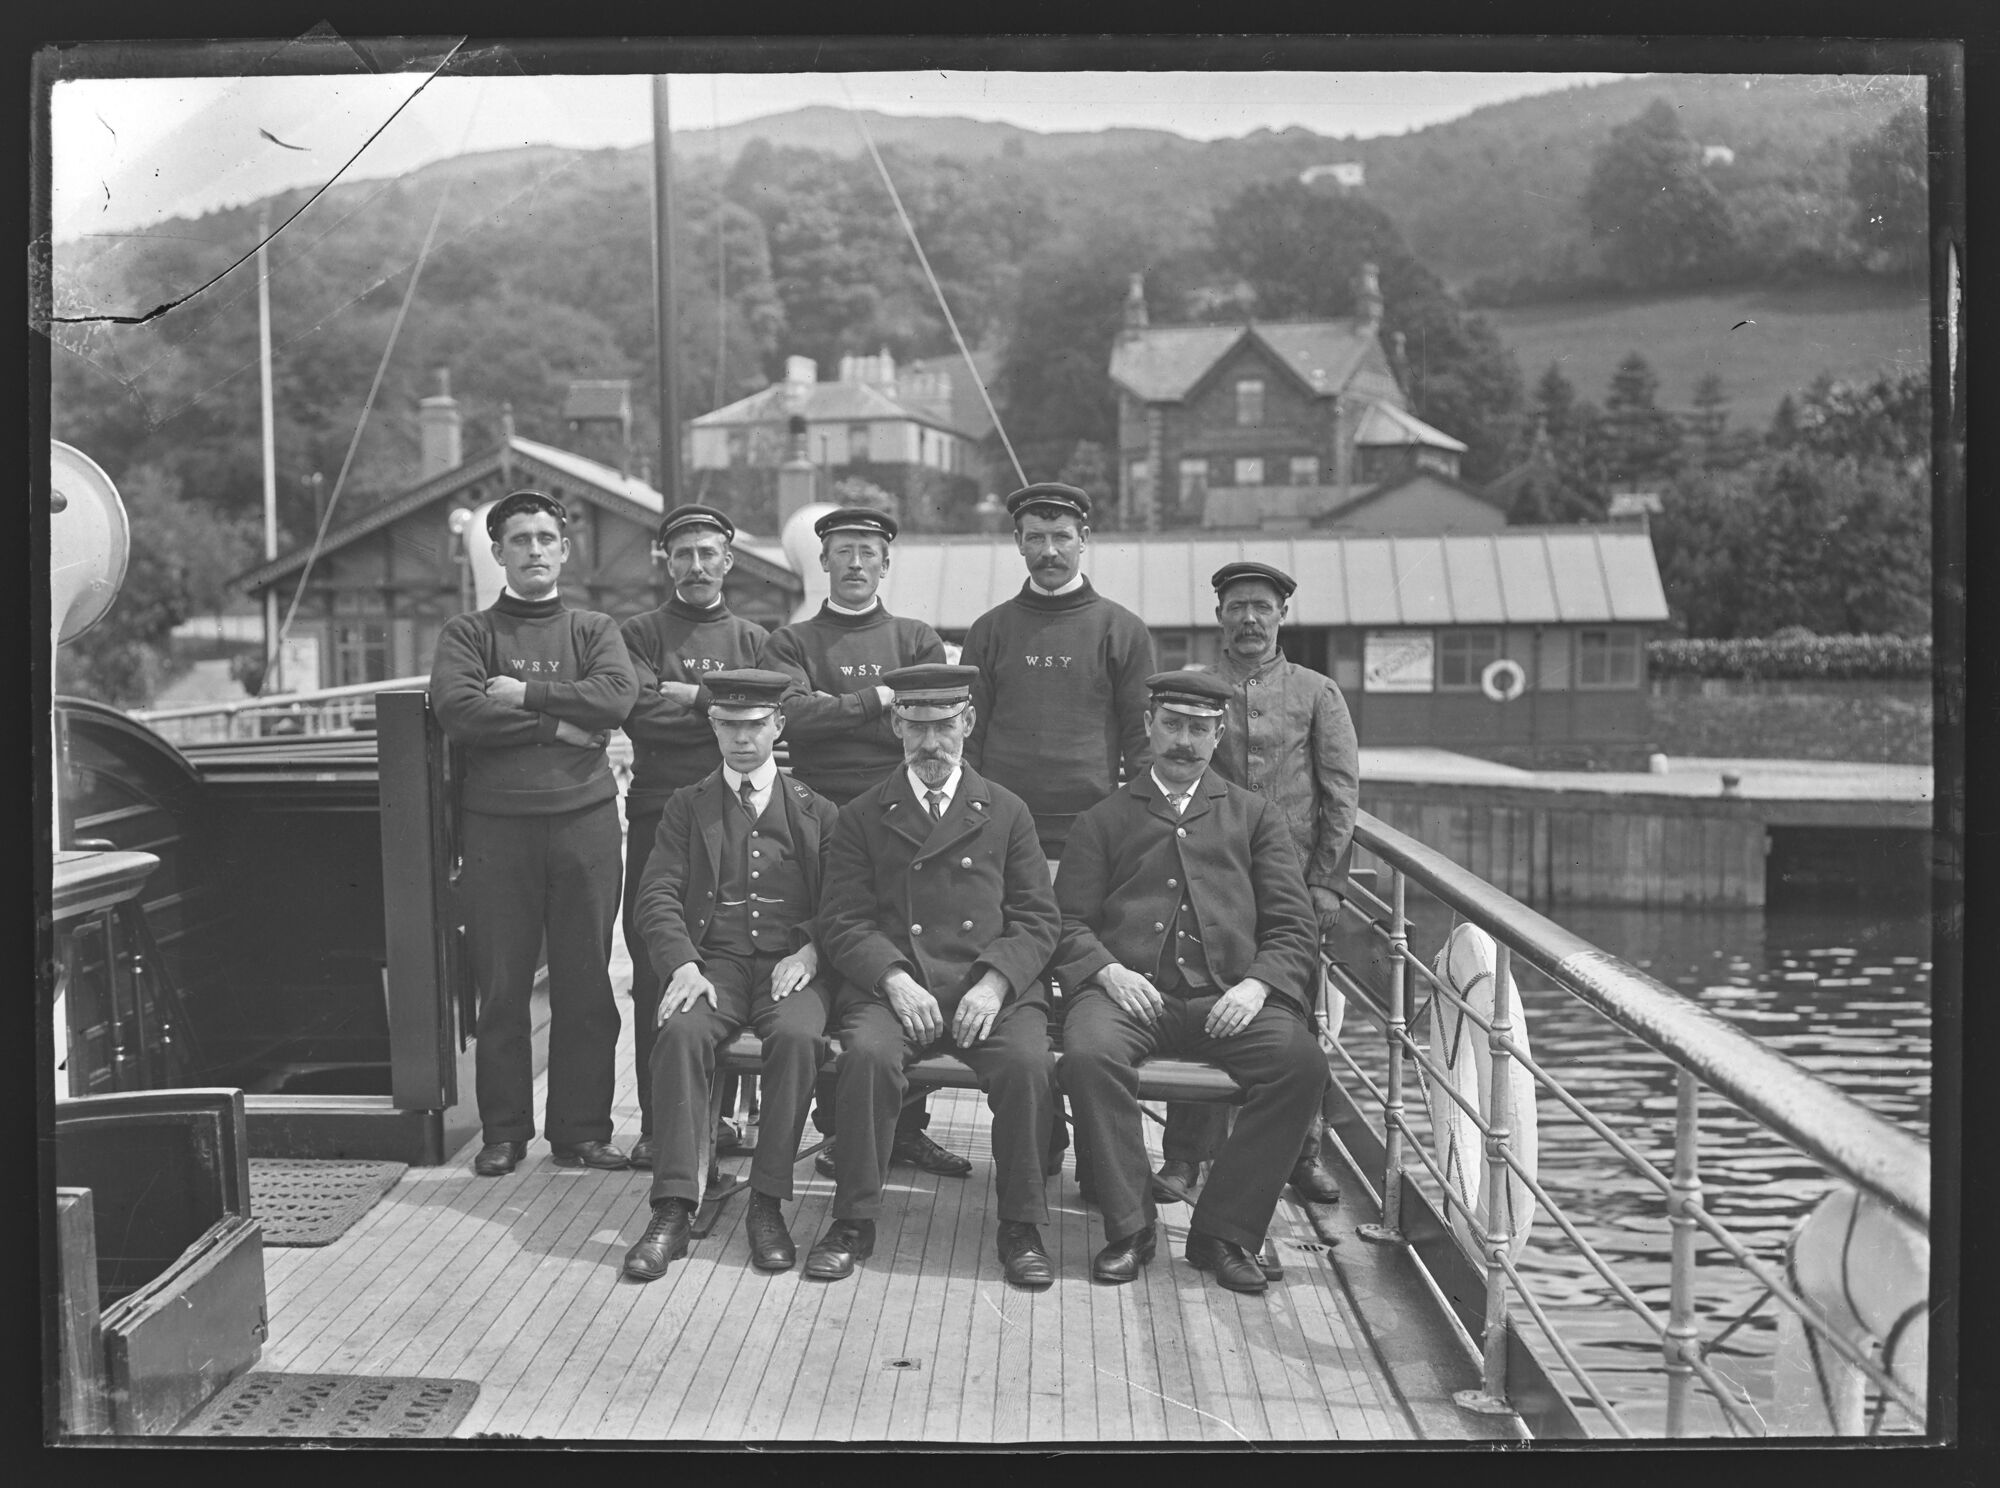 Captain McNeil & Crew. Steam Yacht ”Swift“, Ambleside